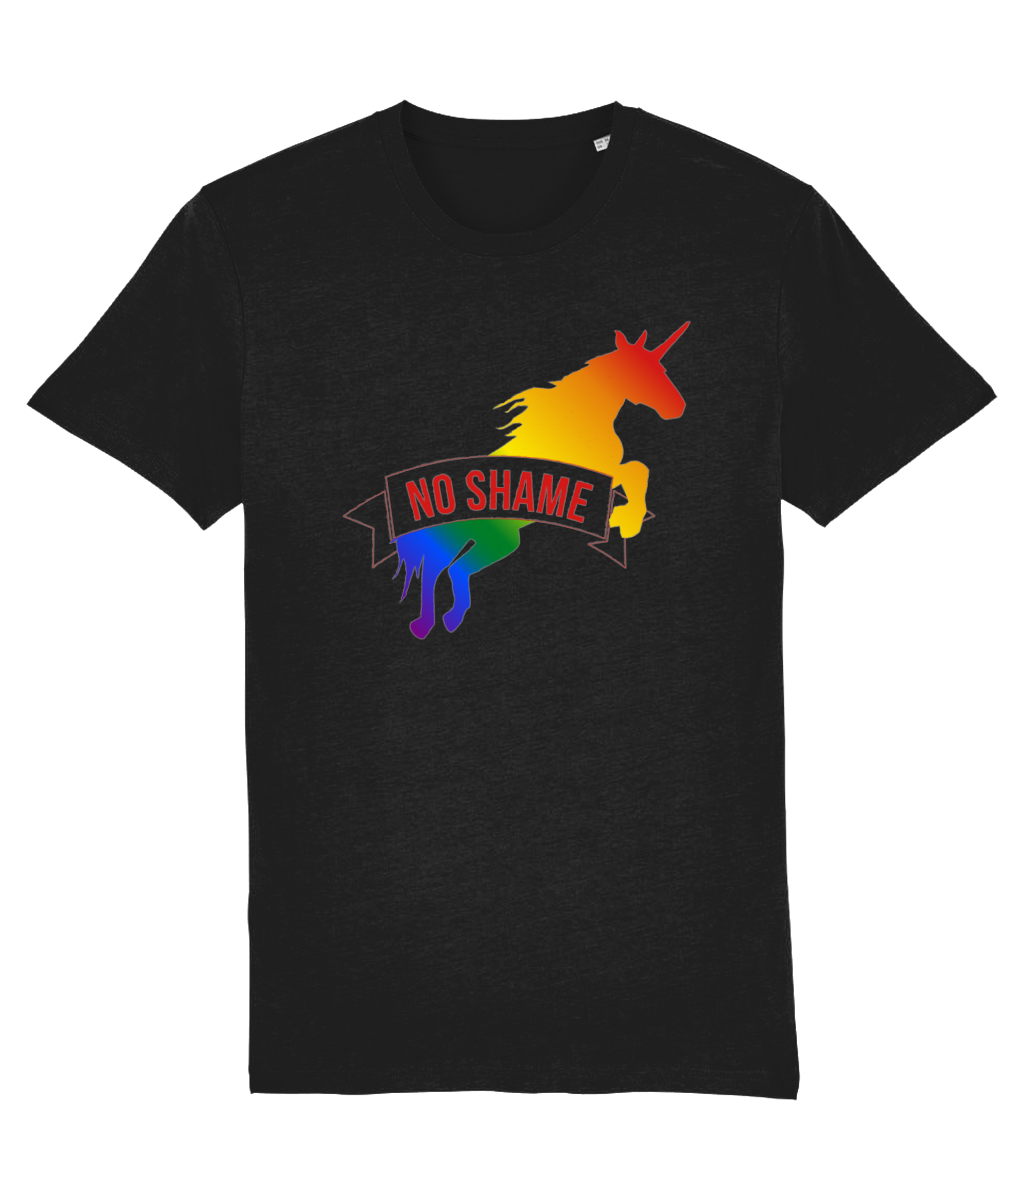 No shame Rainbow Unicorn Organic Cotton T-Shirt